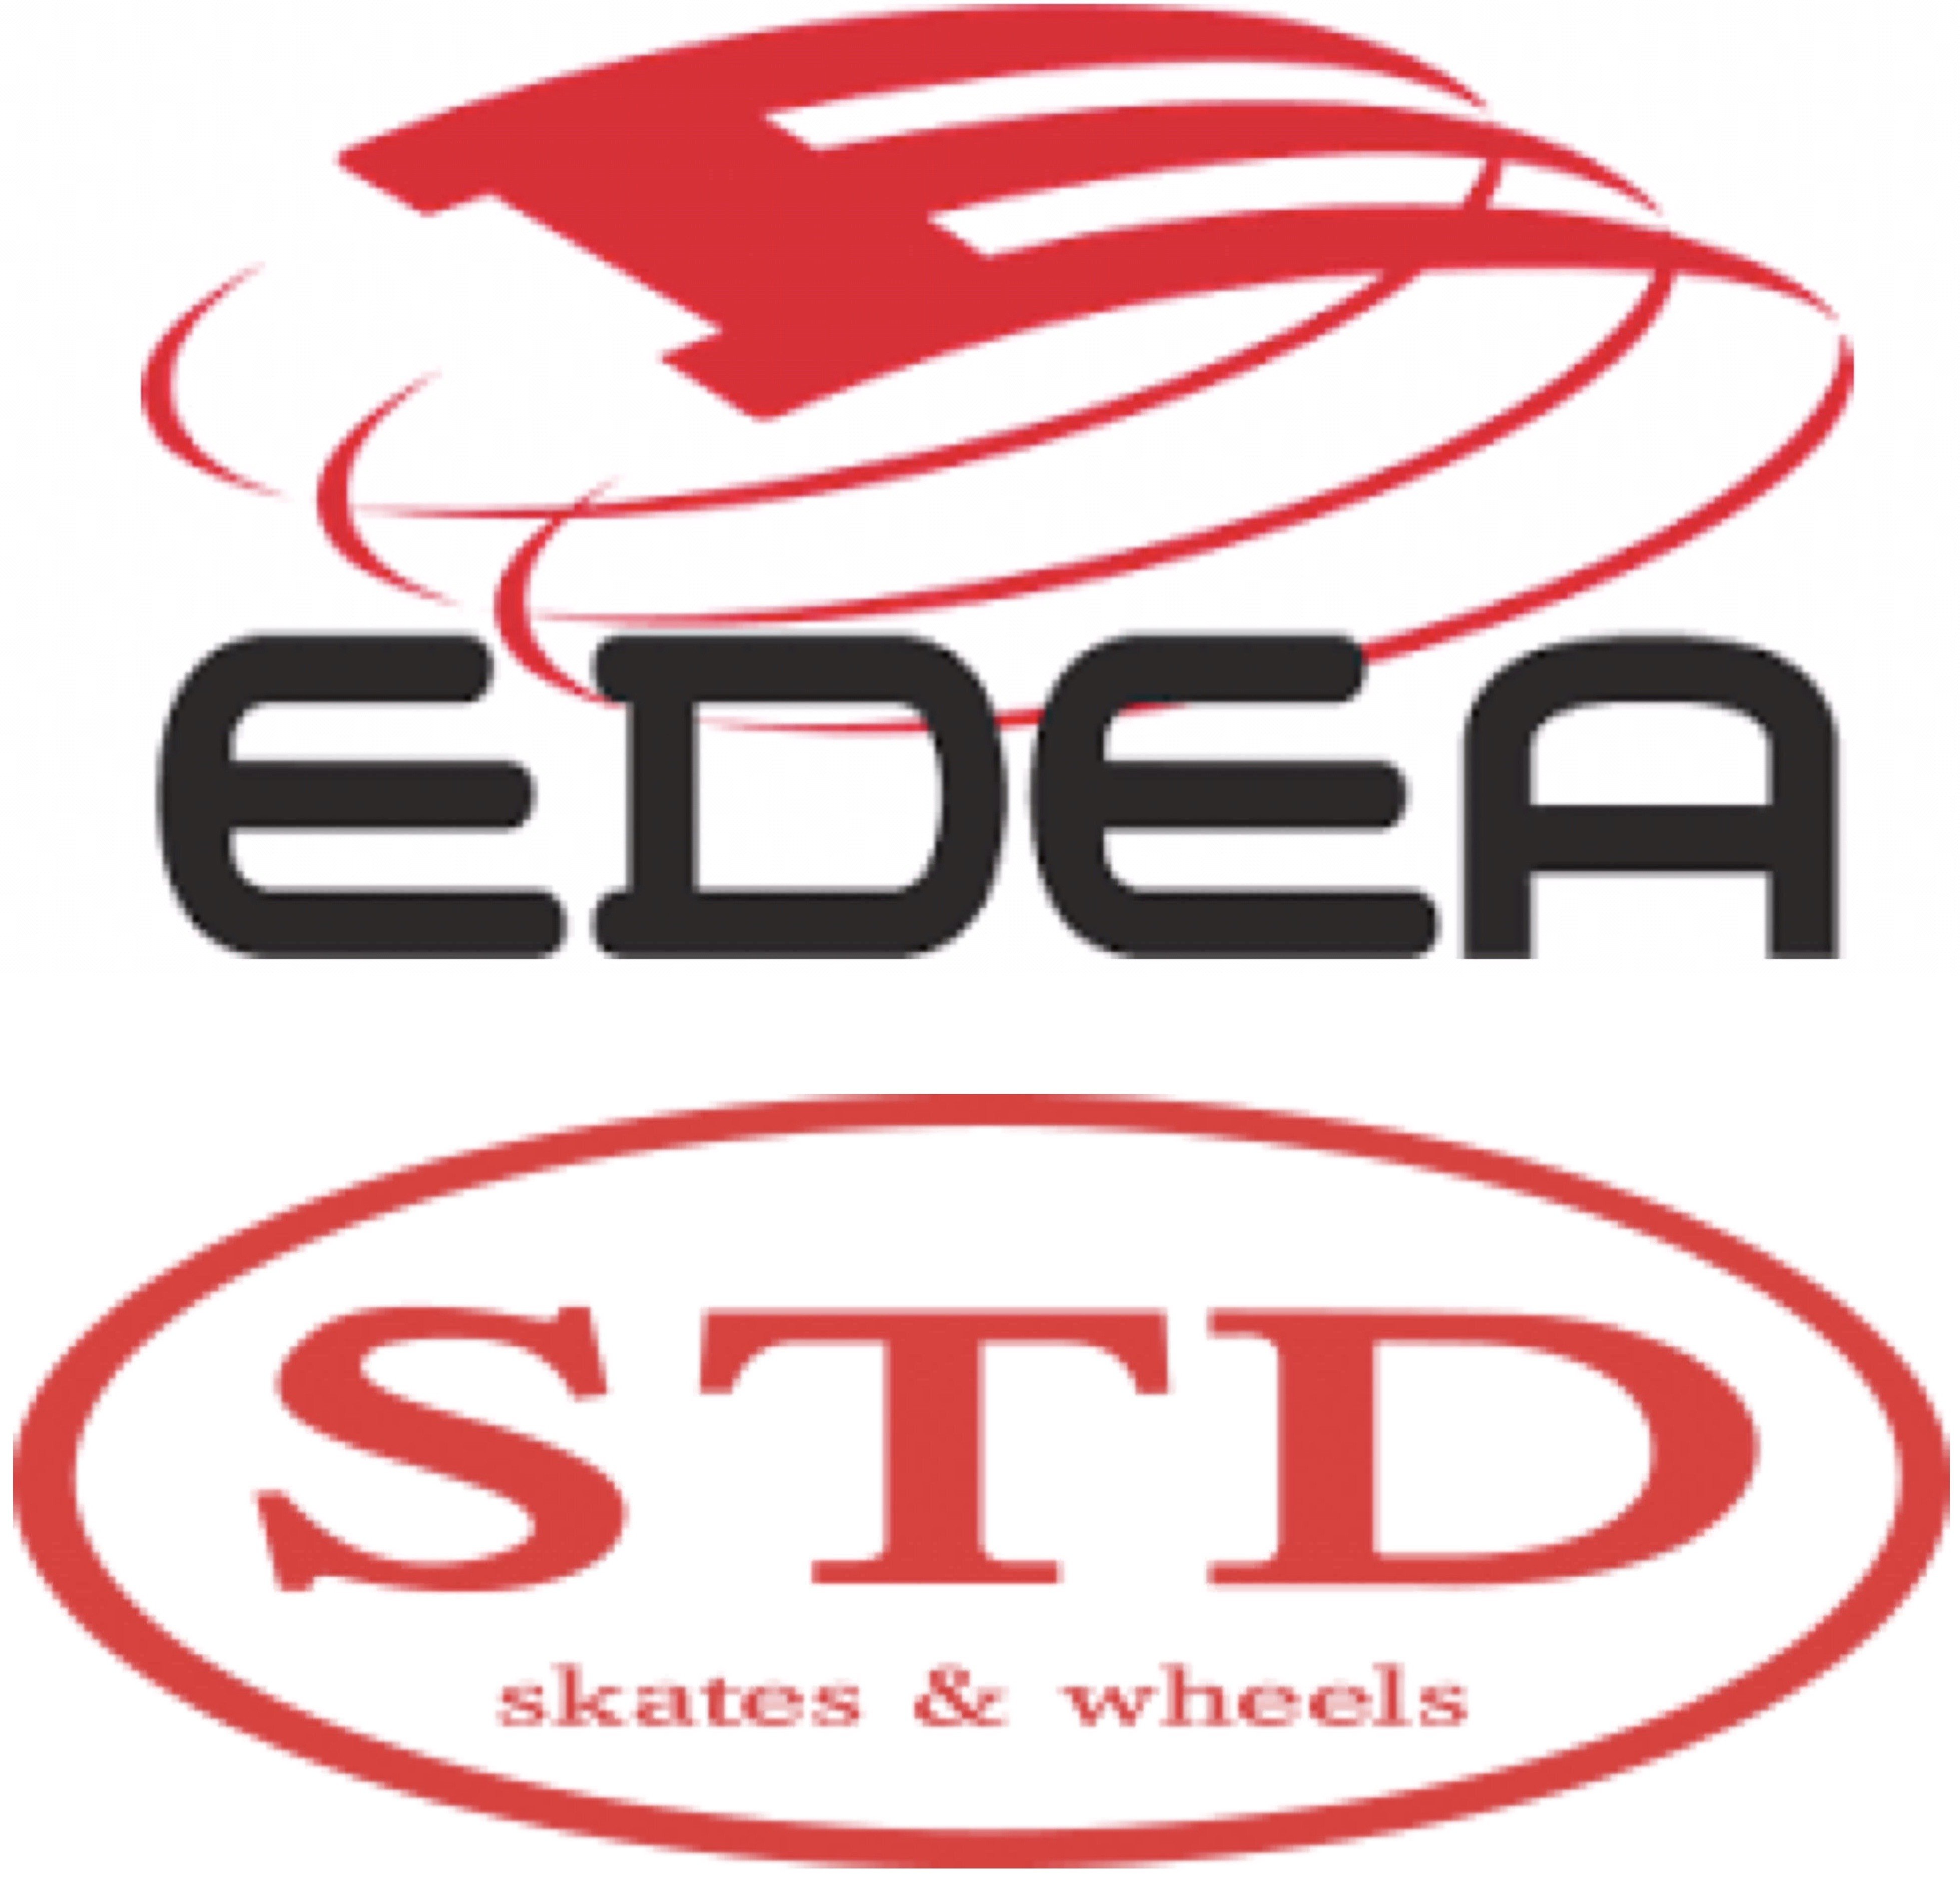 EDEA+STD SKATES